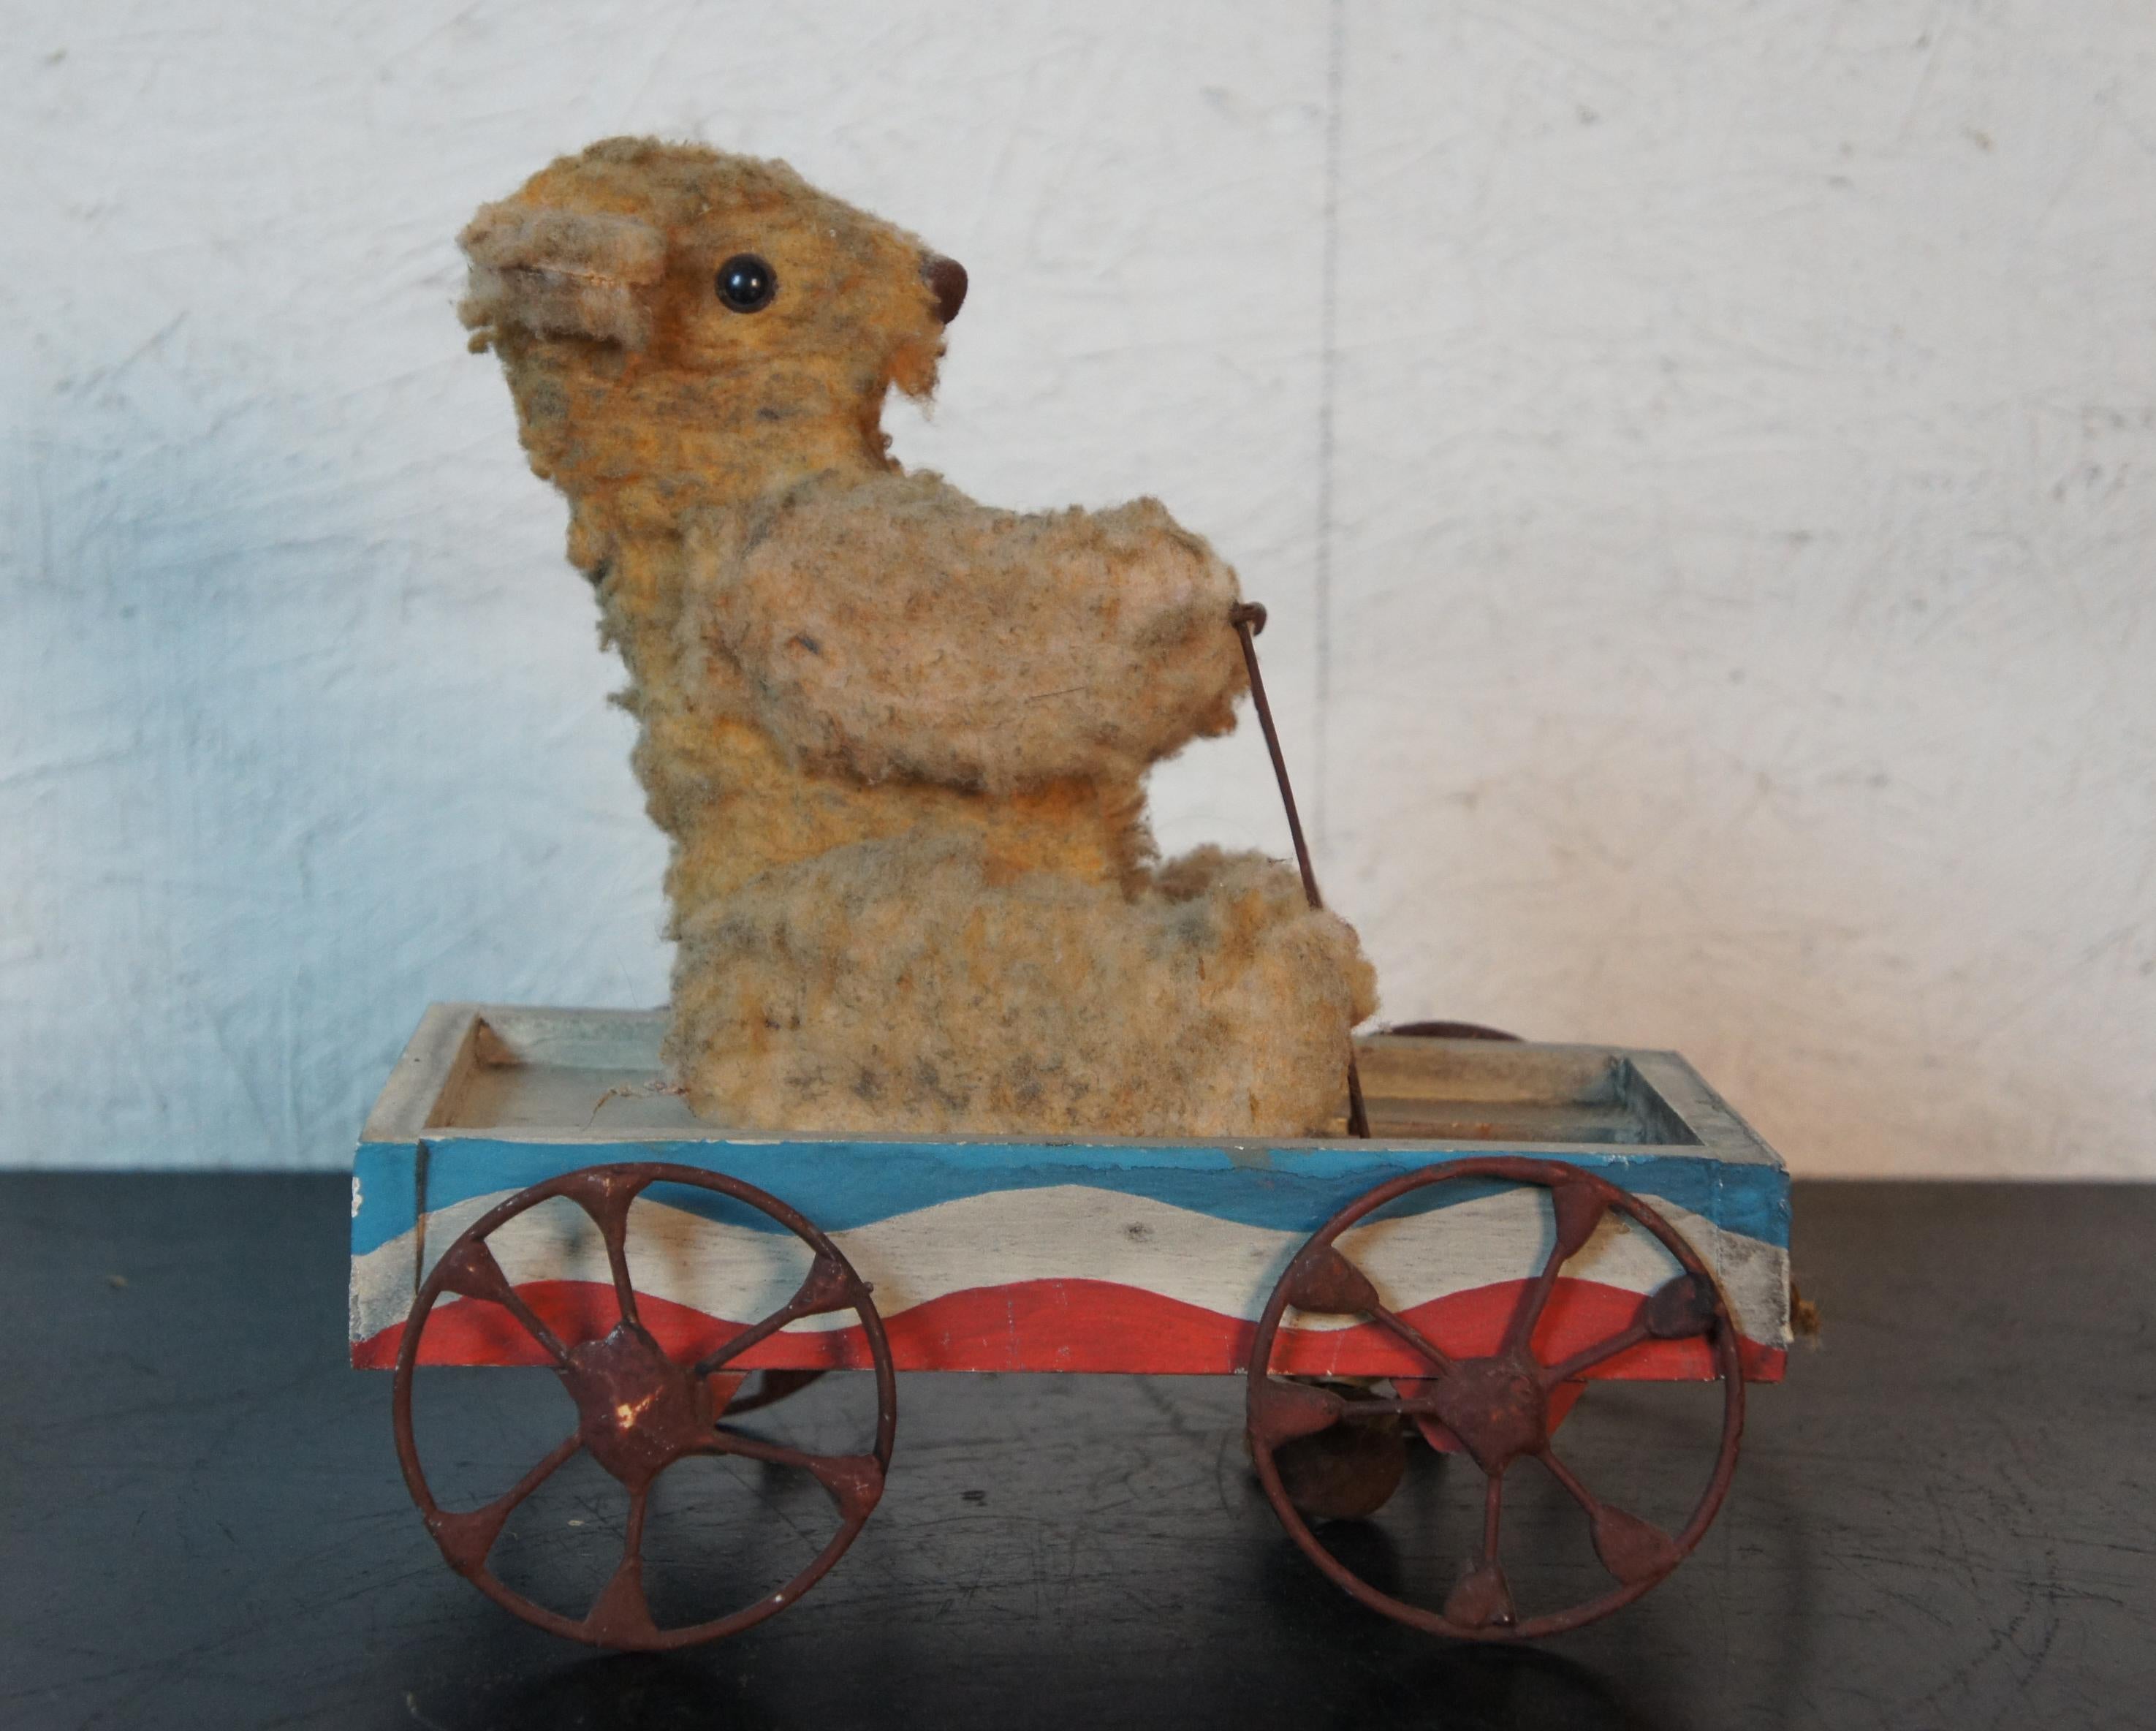 antique childs wagon